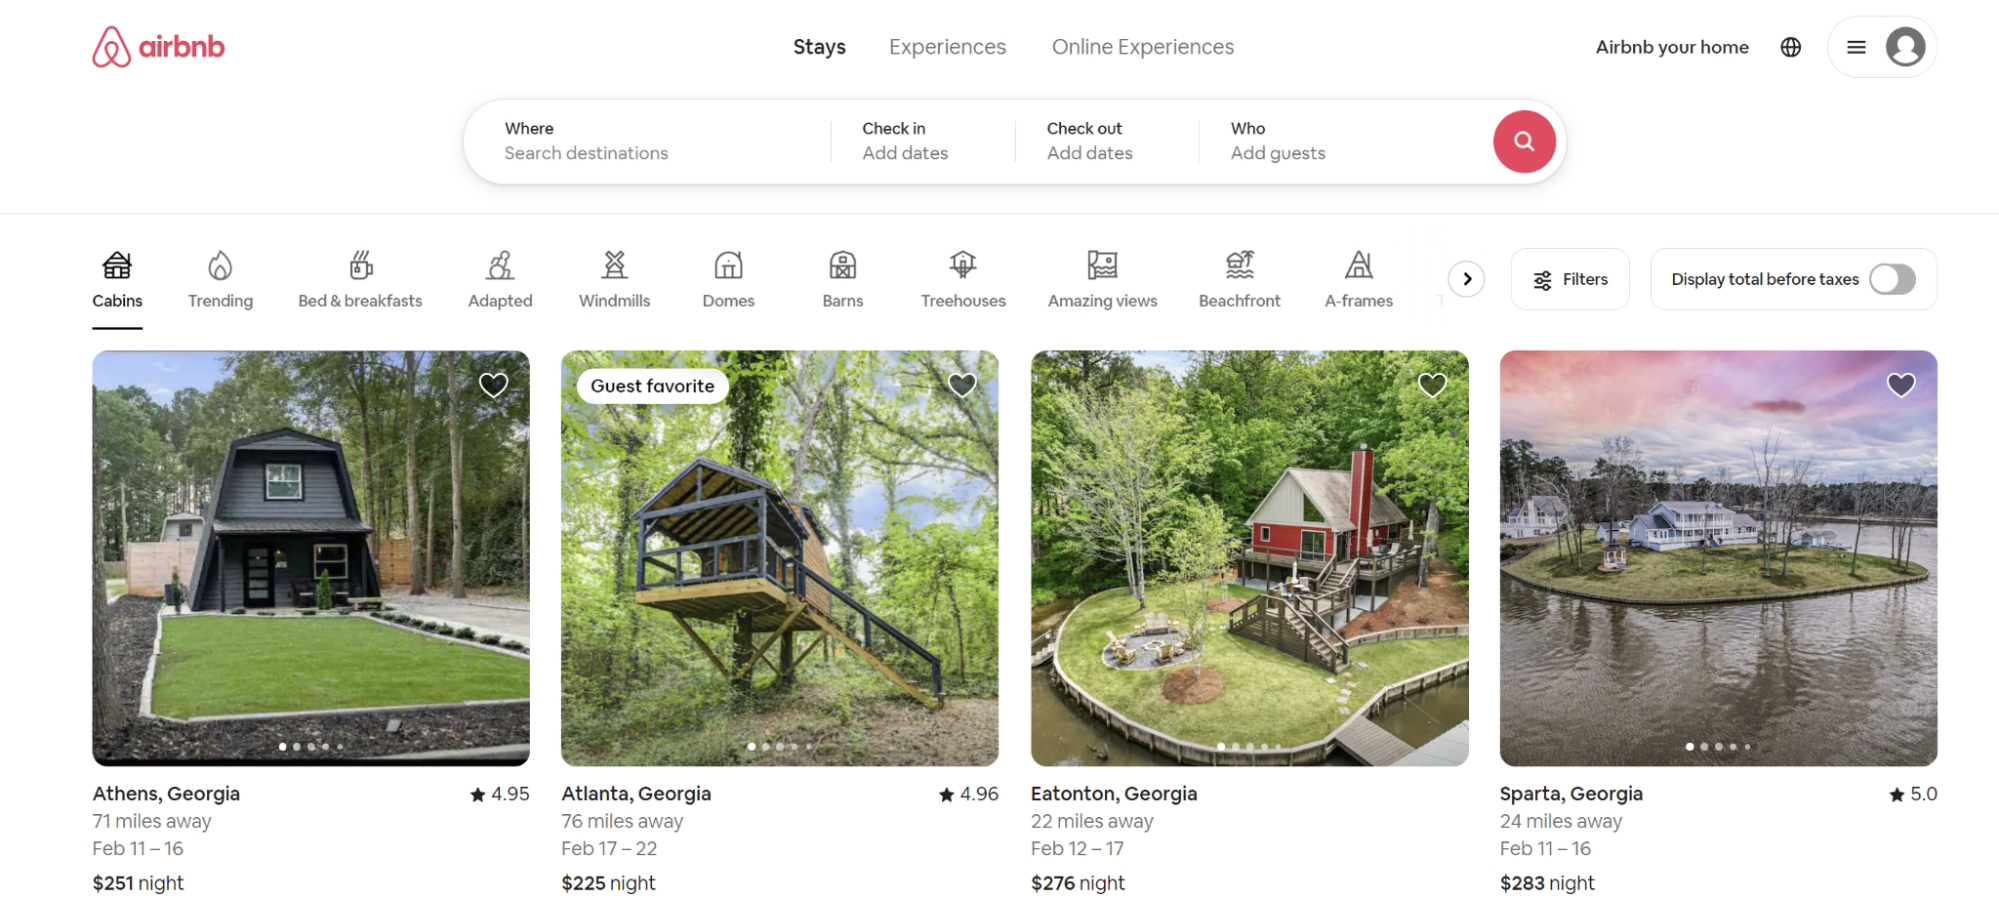 Airbnb website design